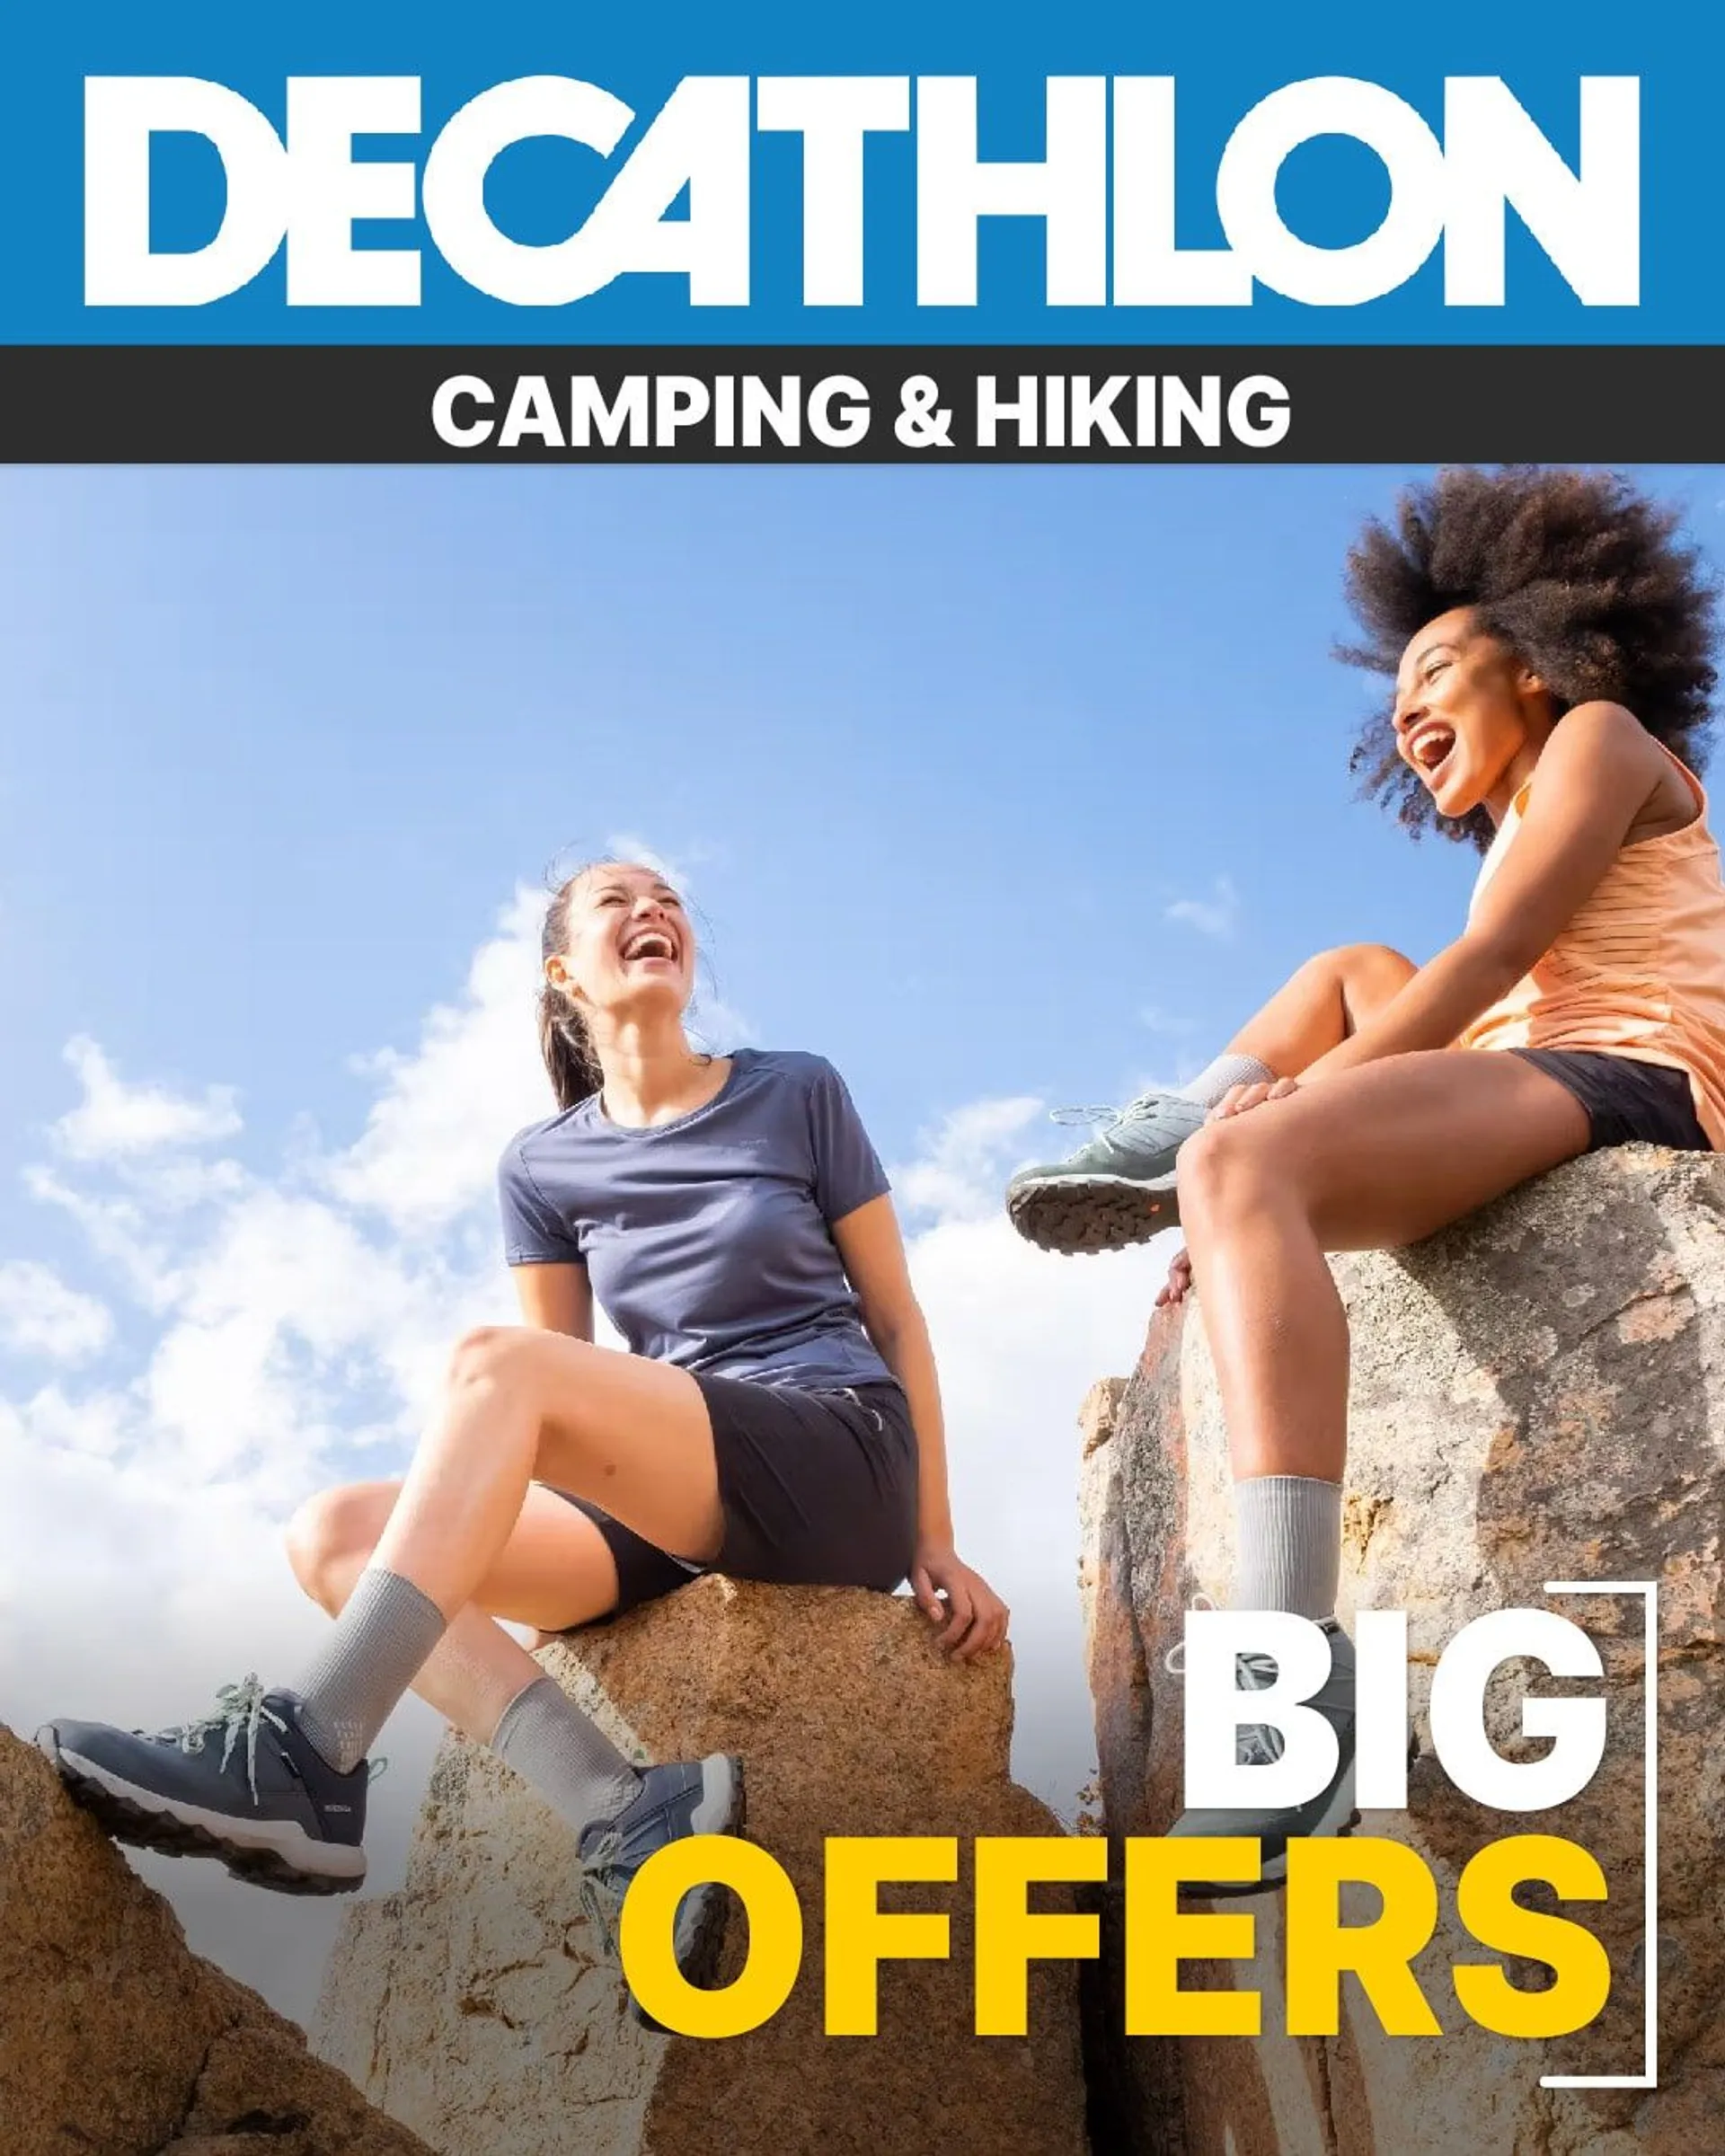 Decathlon - Camping & hiking